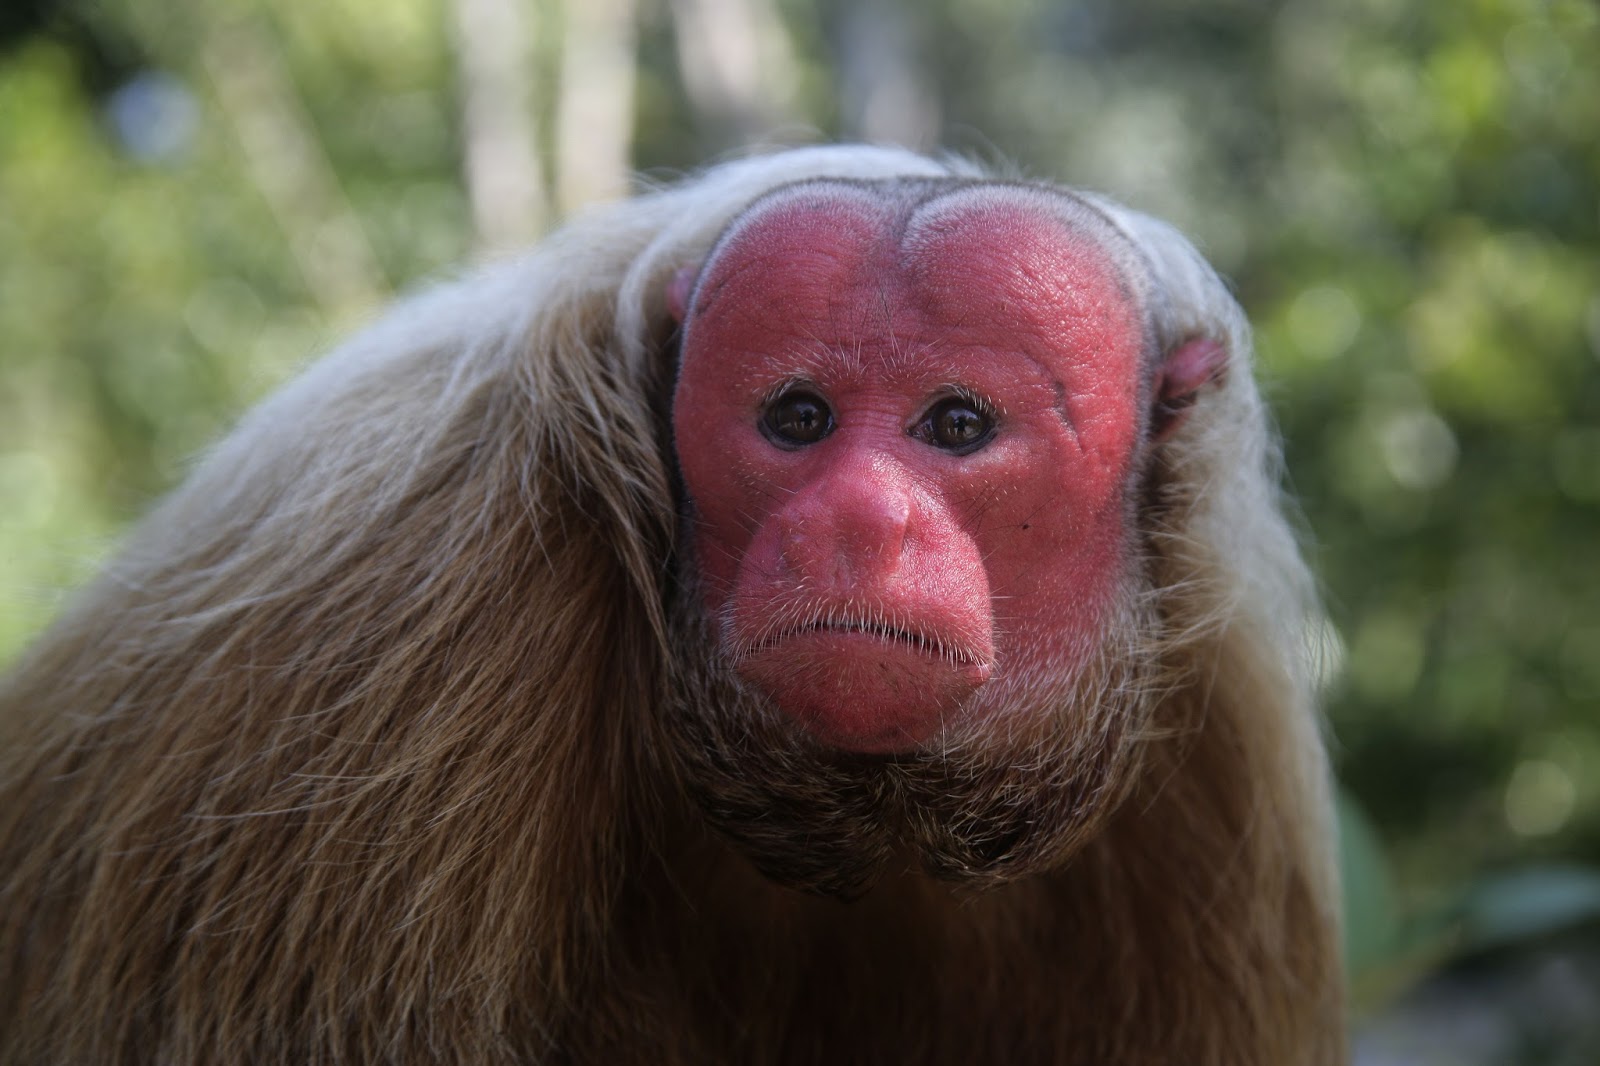 Bichos da mata/Macaco Uacari-branco - Wikilivros